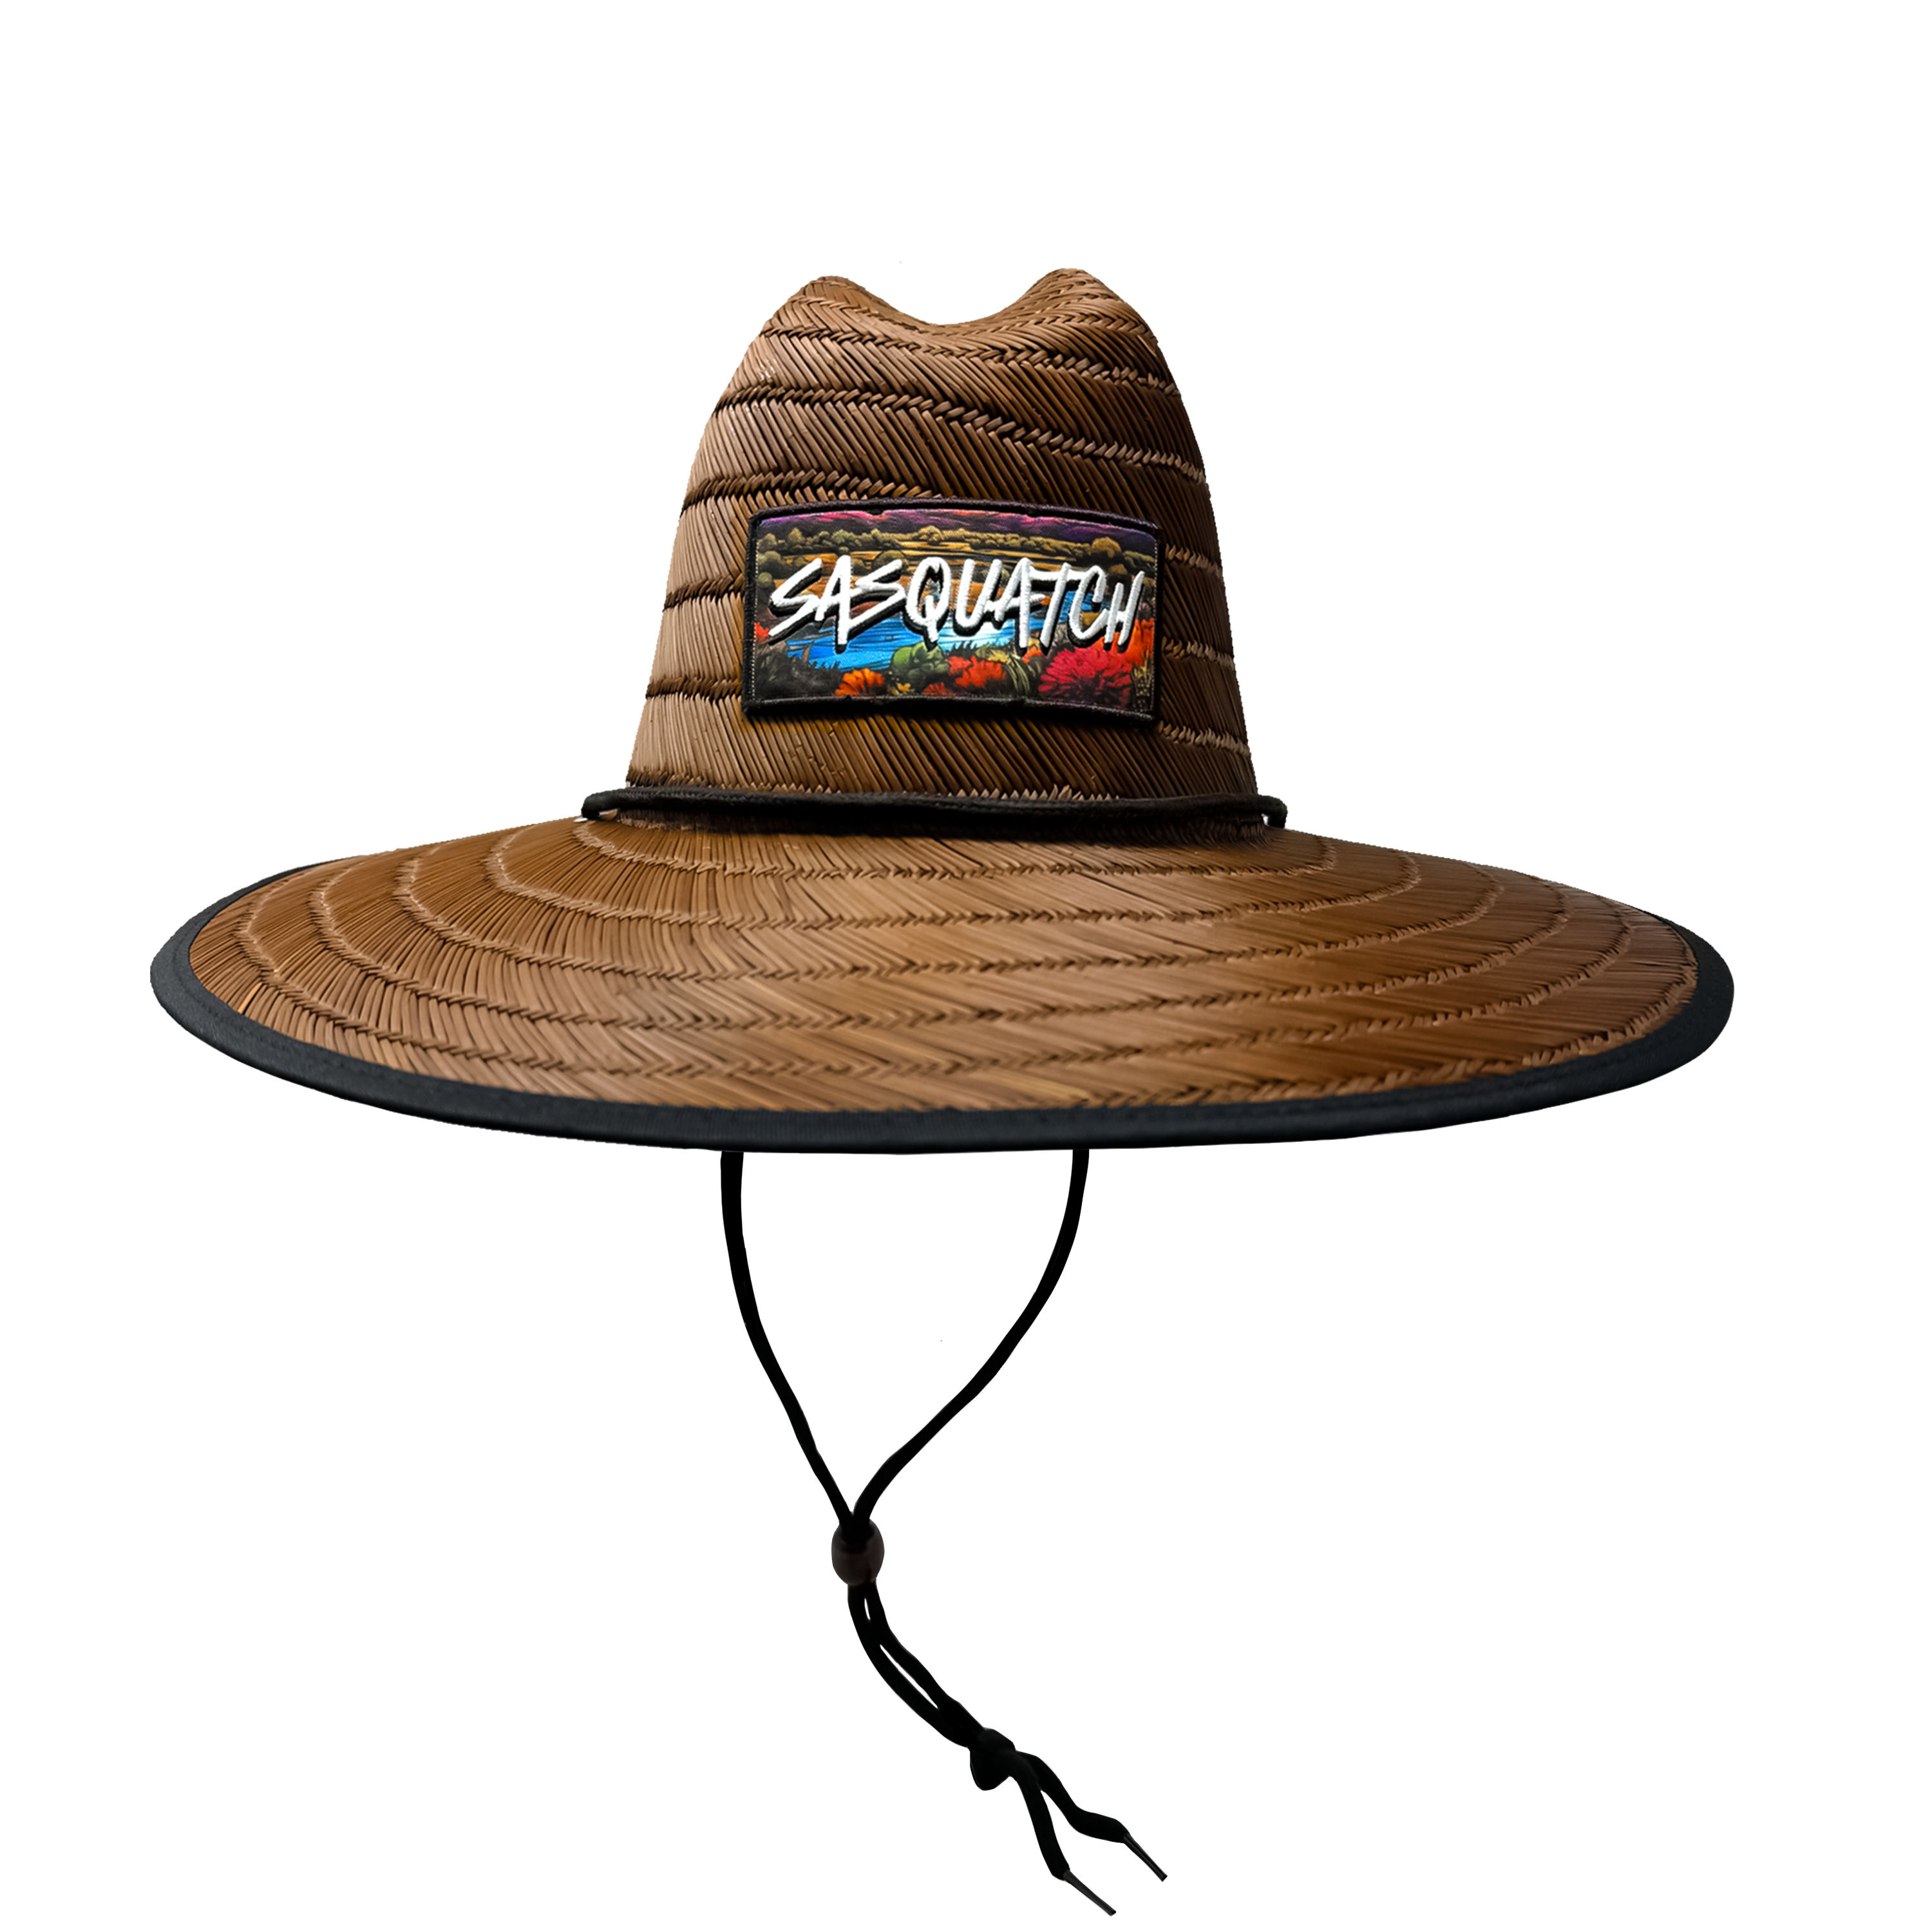 Sasquatch Straw Hat-Limited Edition